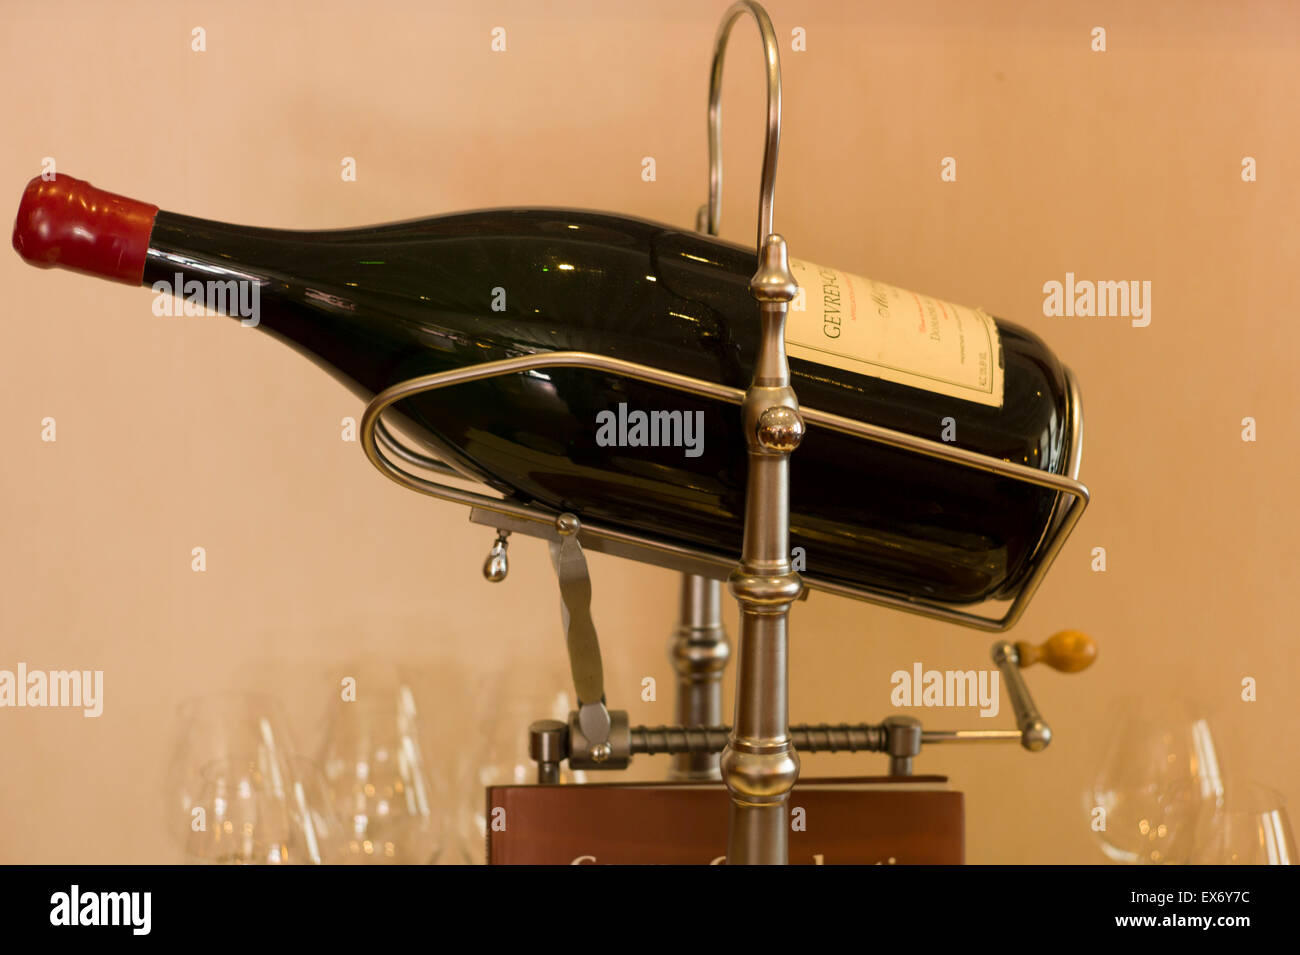 A Jeroboam of Gevrey Chambertin Wine in its lifting  cradle Stock Photo